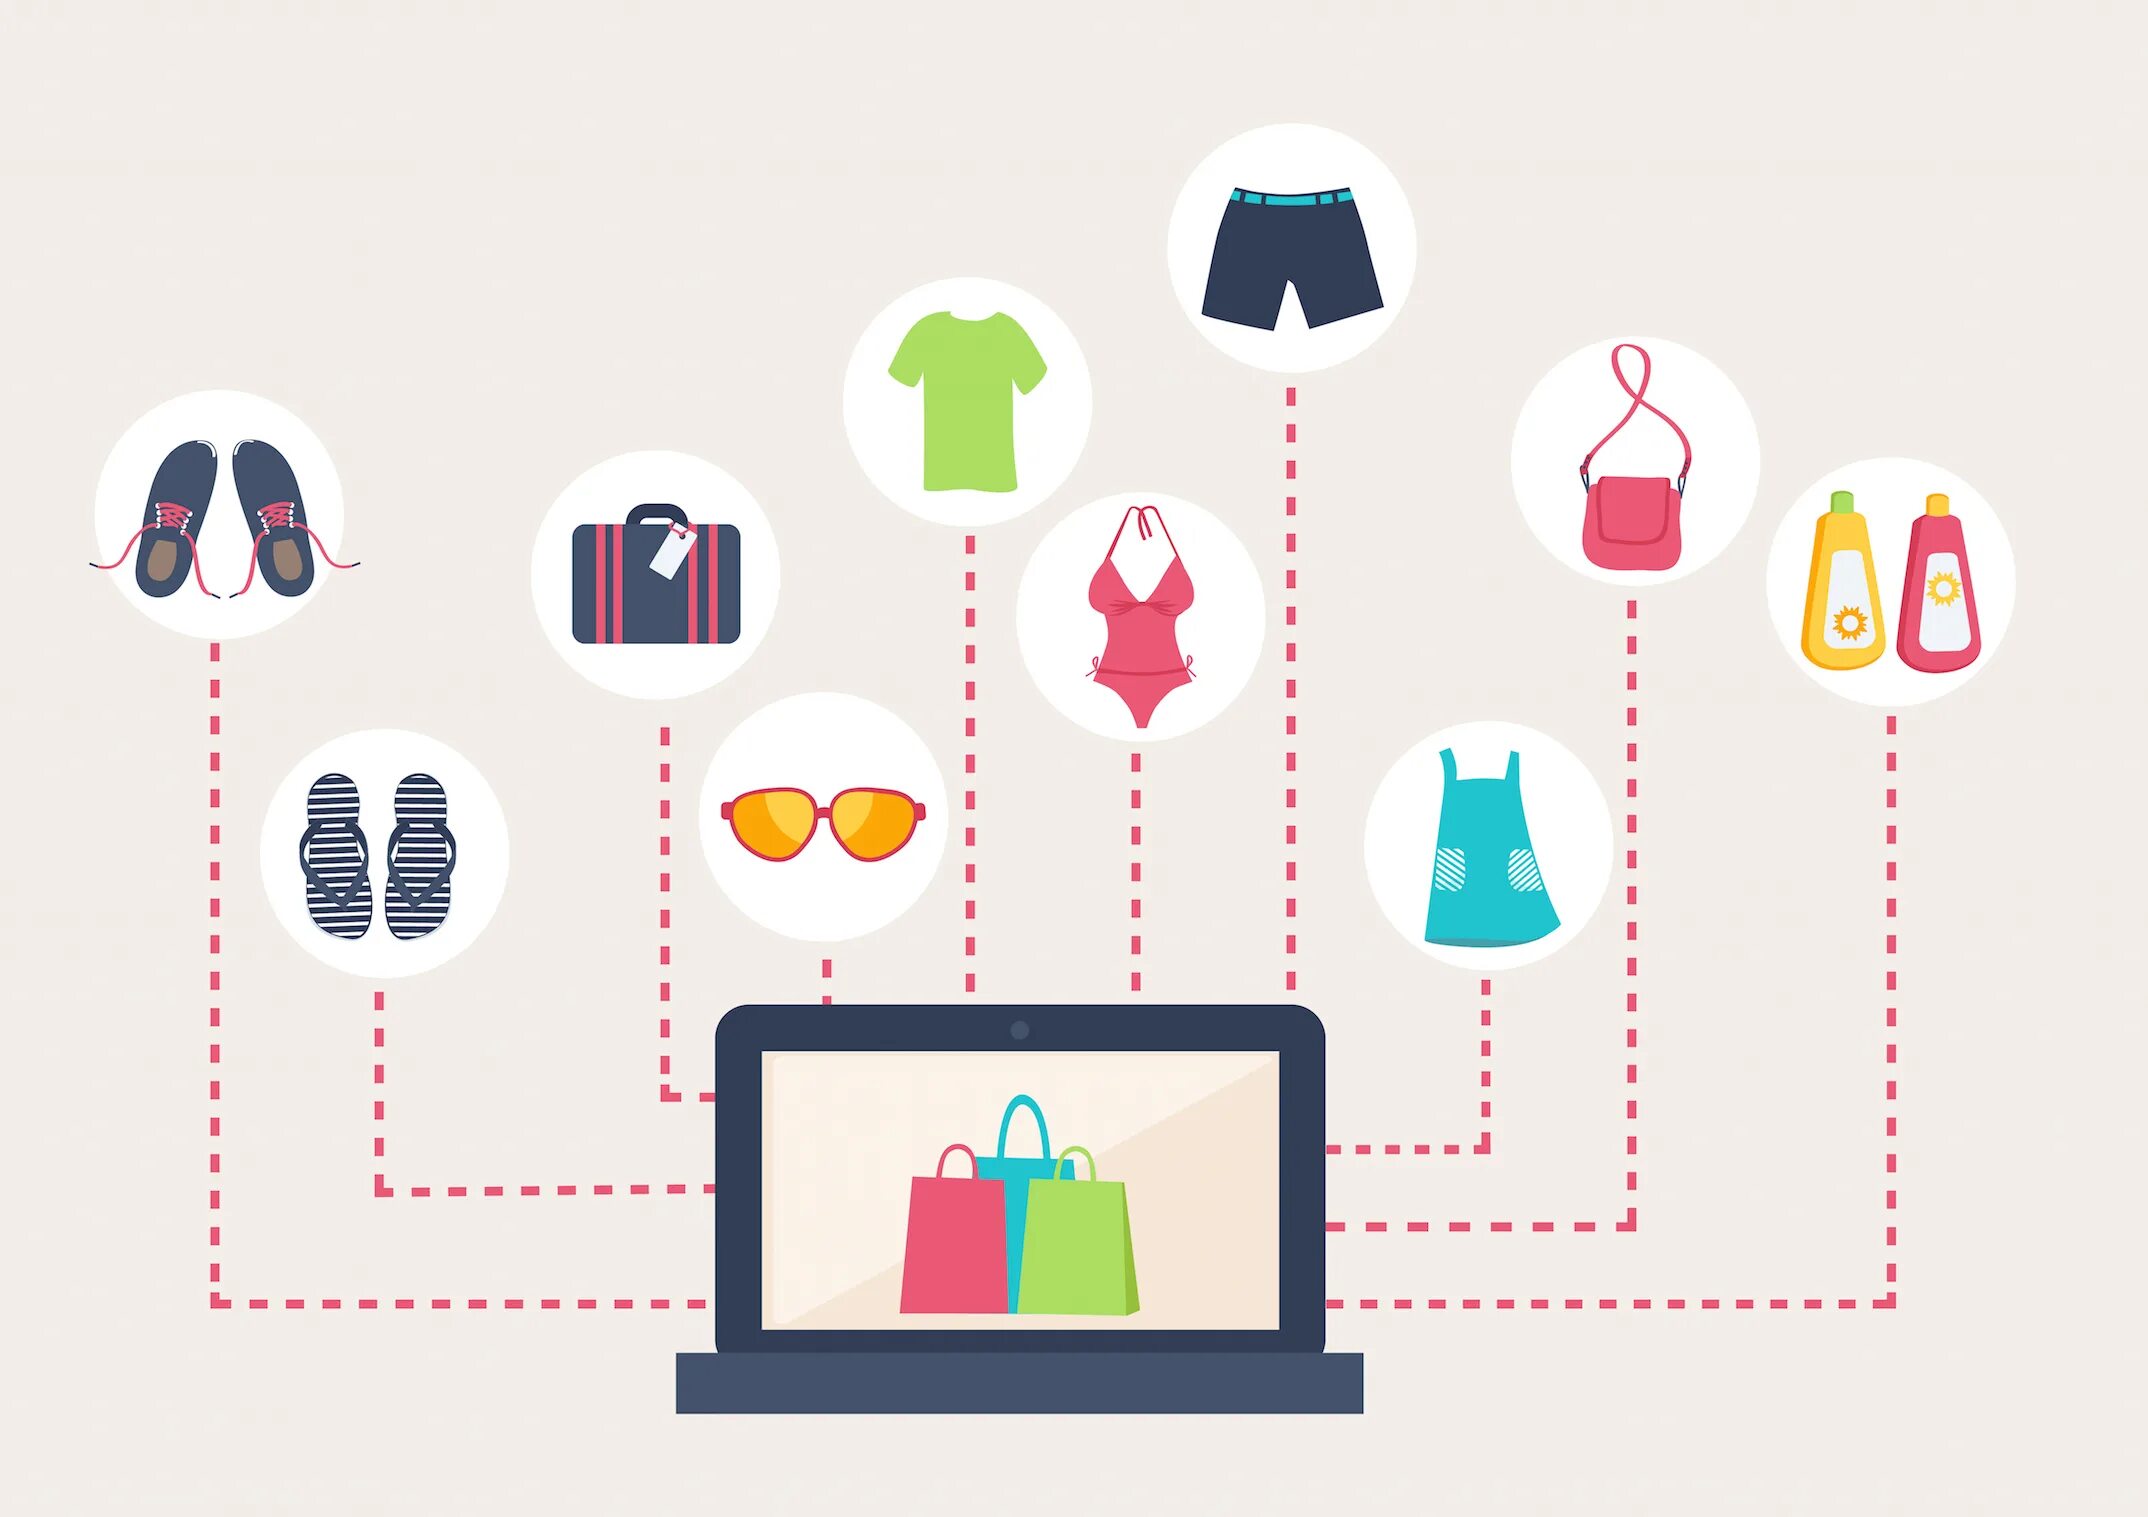 A shopping product is. E–Commerce рисунок. Ассортимент иллюстрация. Электронная коммерция инфографика.